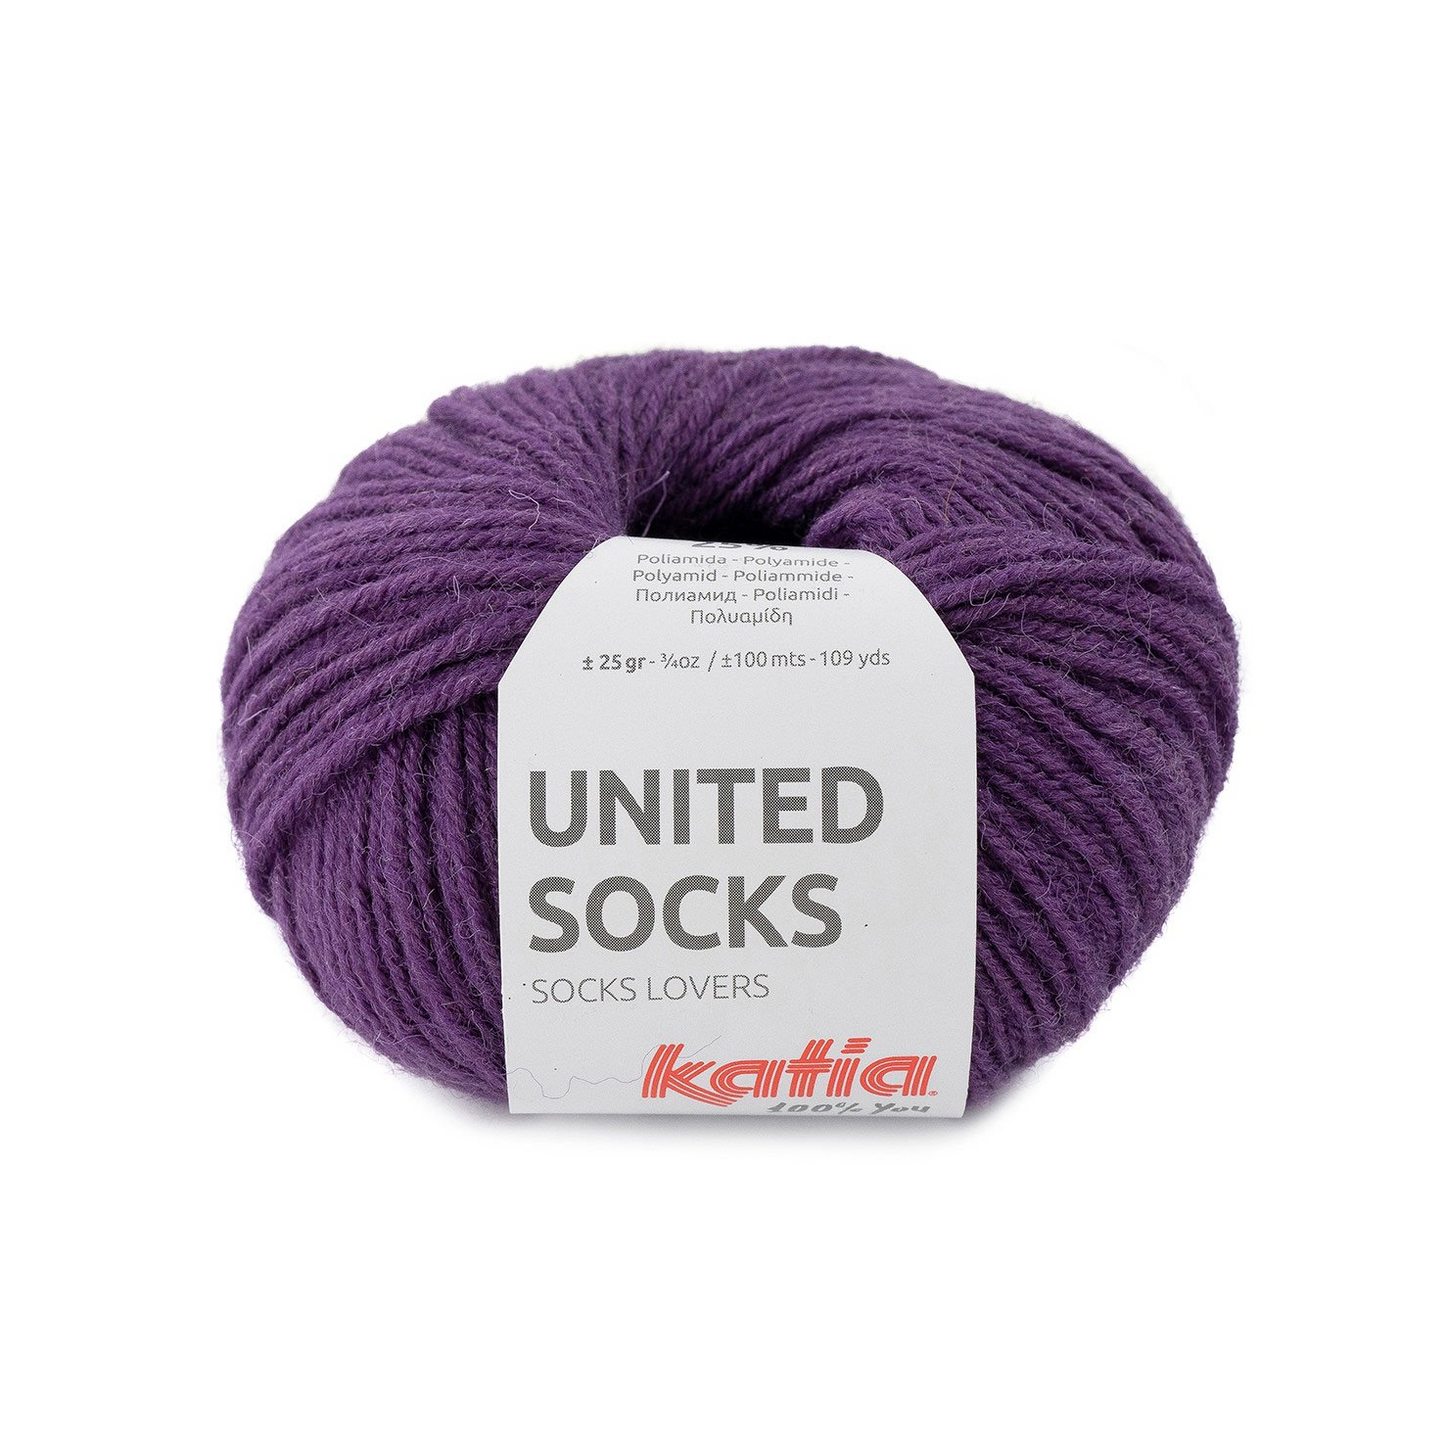 United Socks de Katia